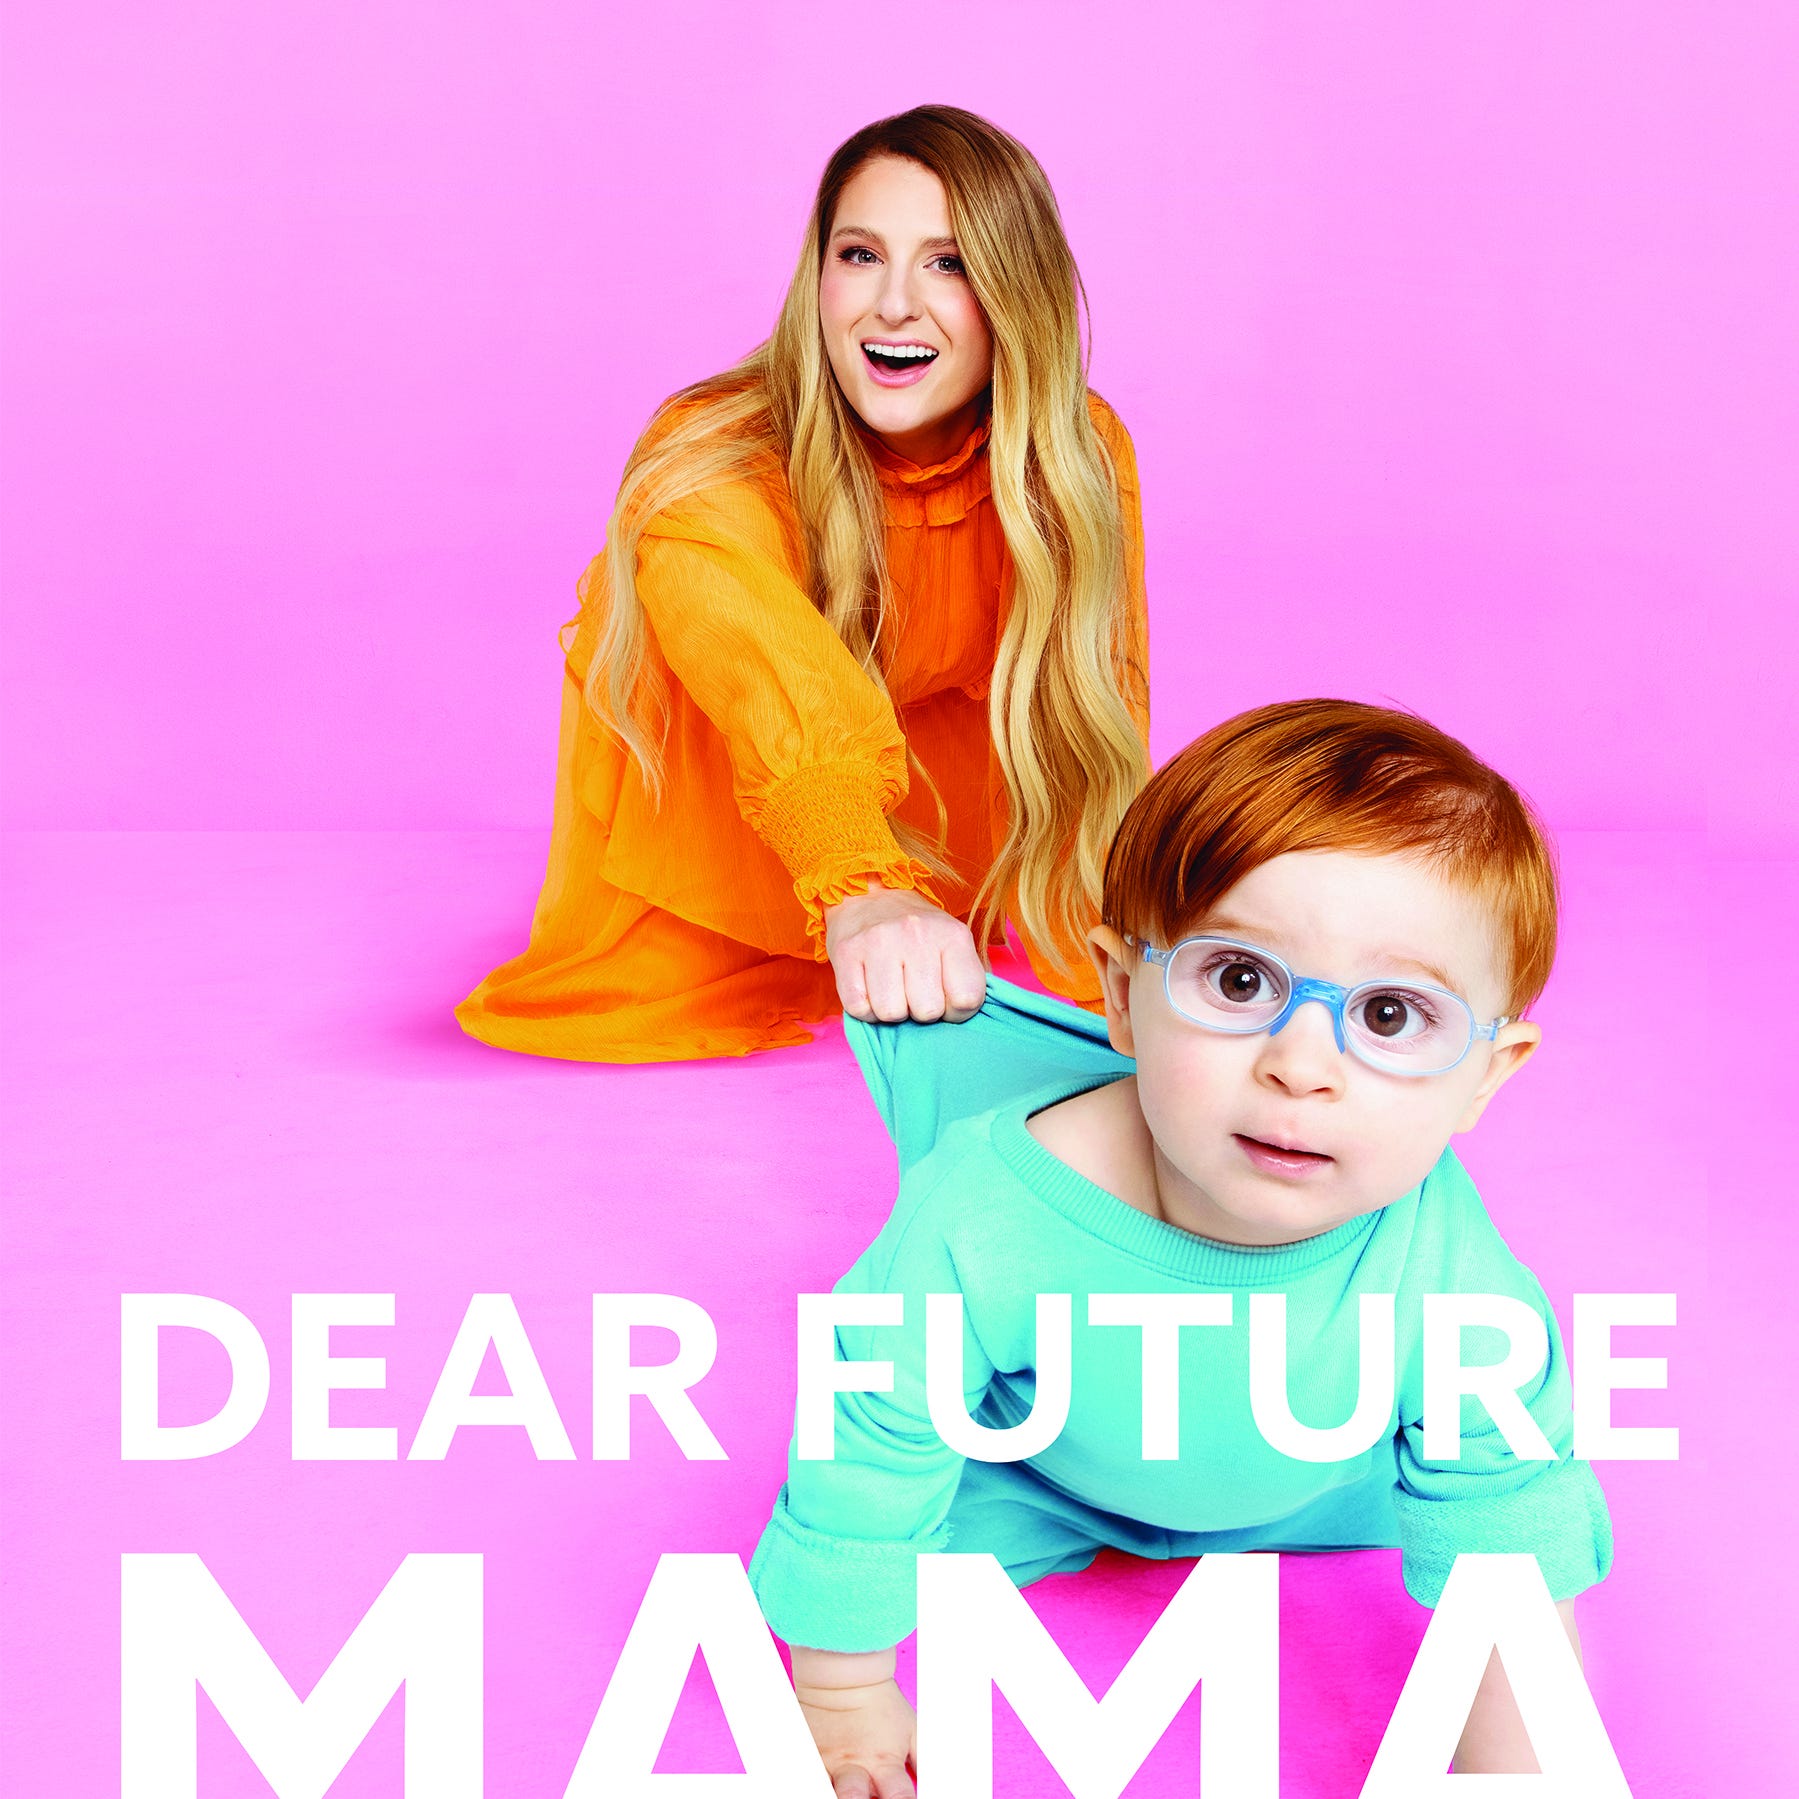 "Dear Future Mama" by Meghan Trainor